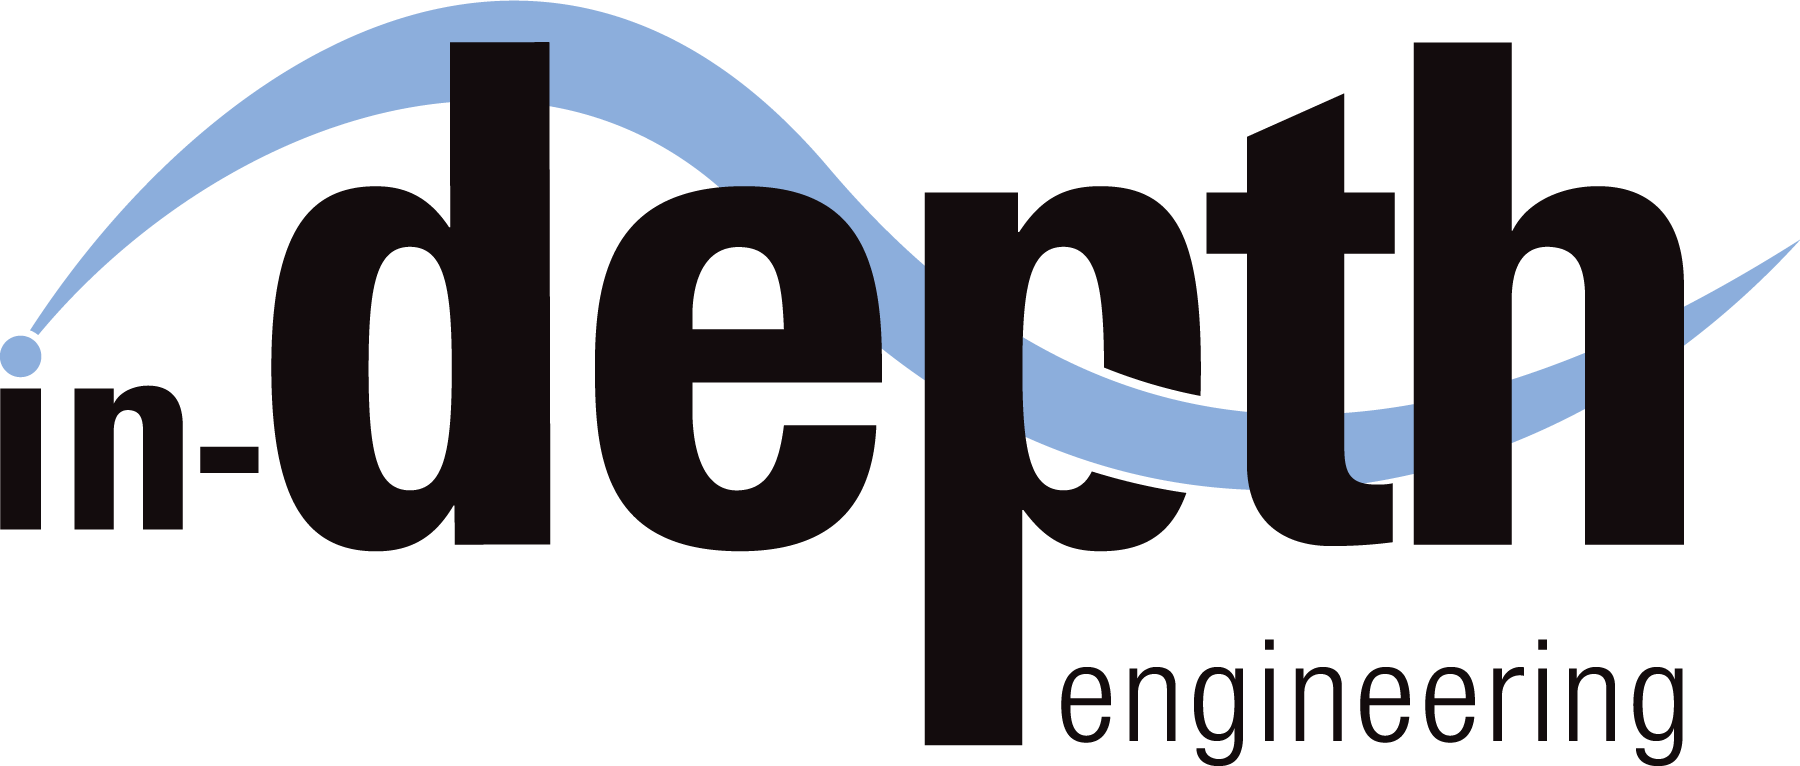 Depth Logo - In-Depth Engineering